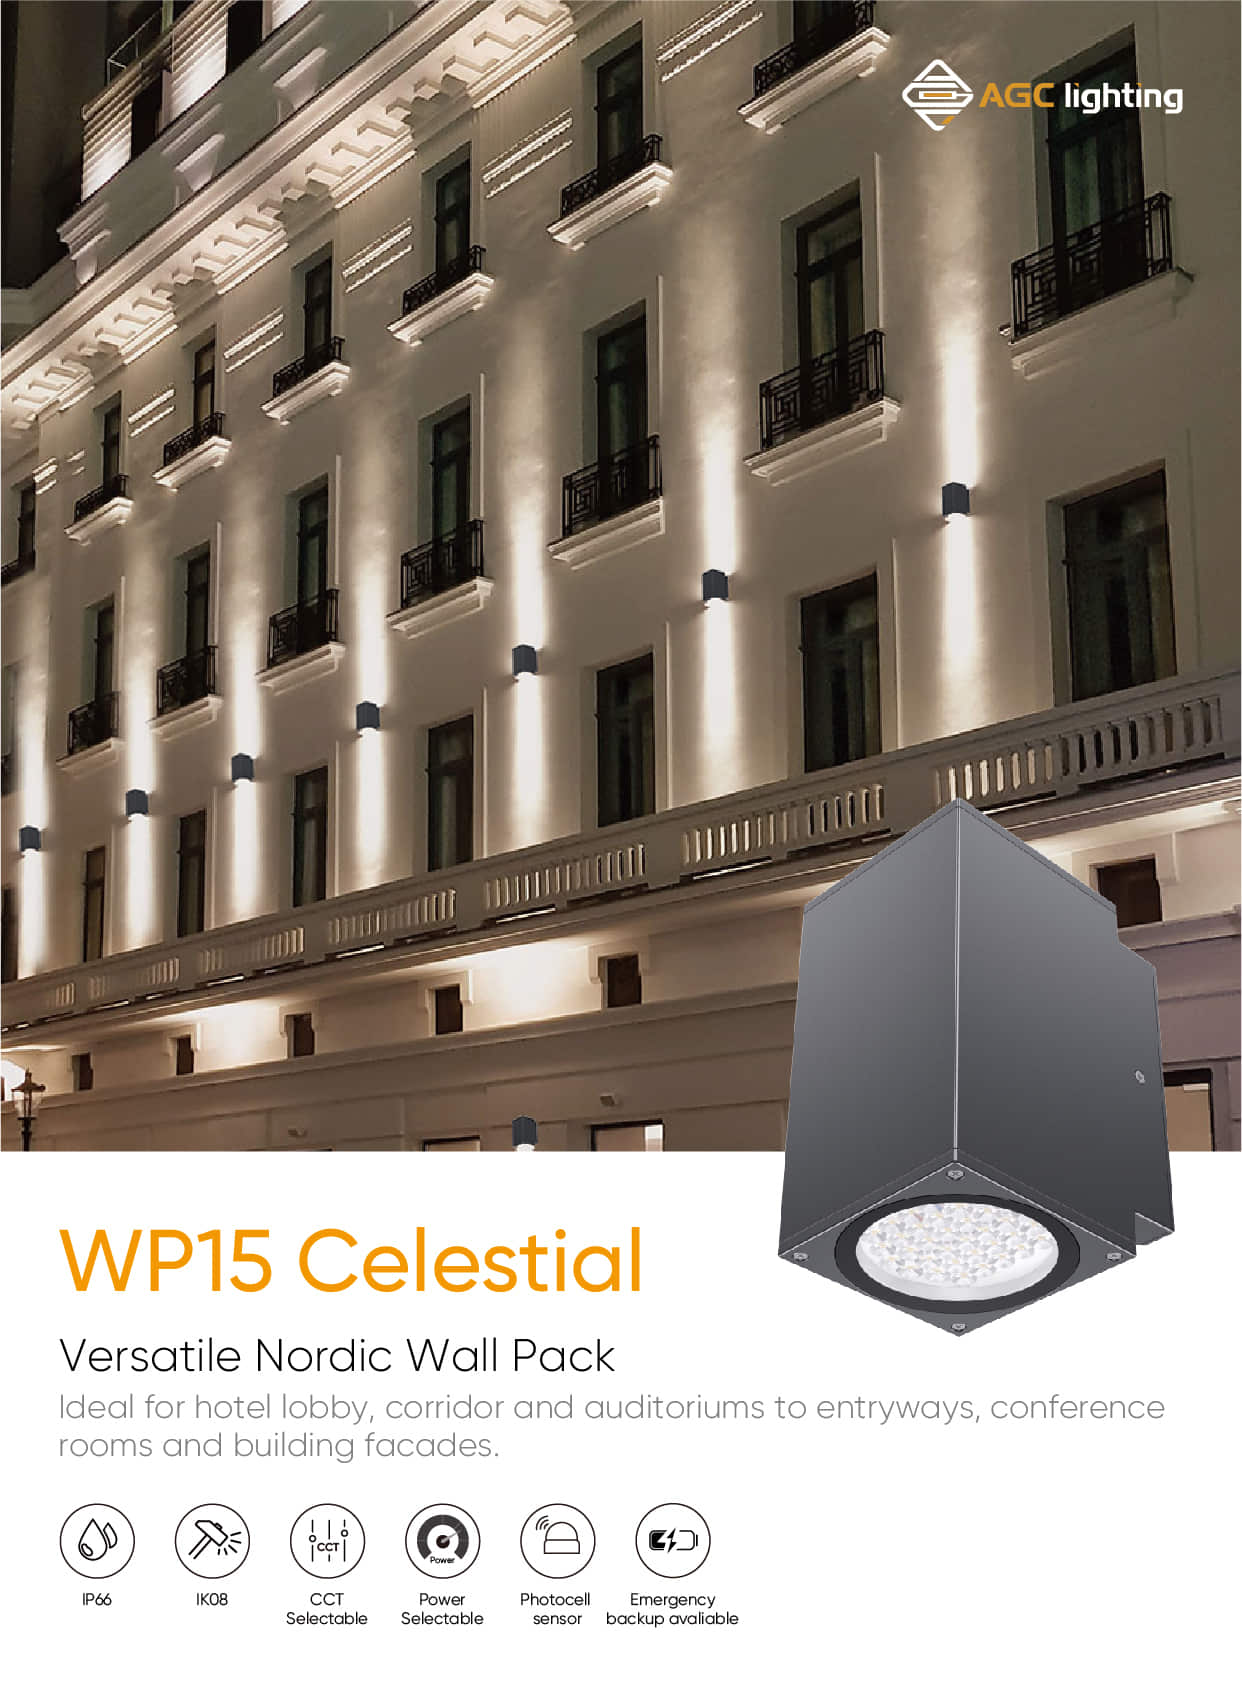 WP15 Versatile Nordic Wall Pack